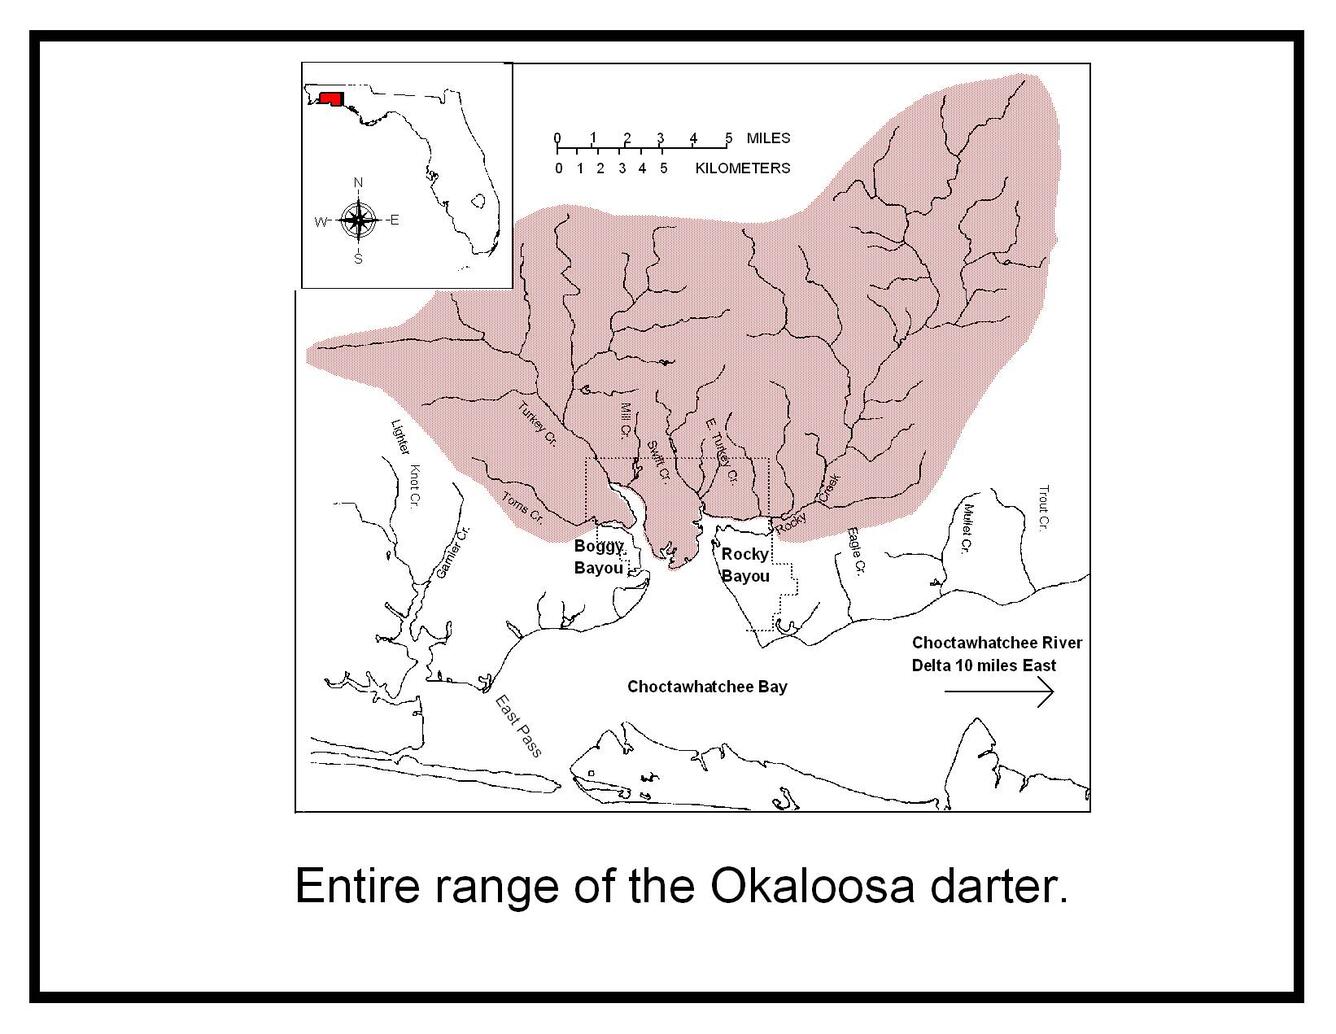 Entire range of Okaloosa darter